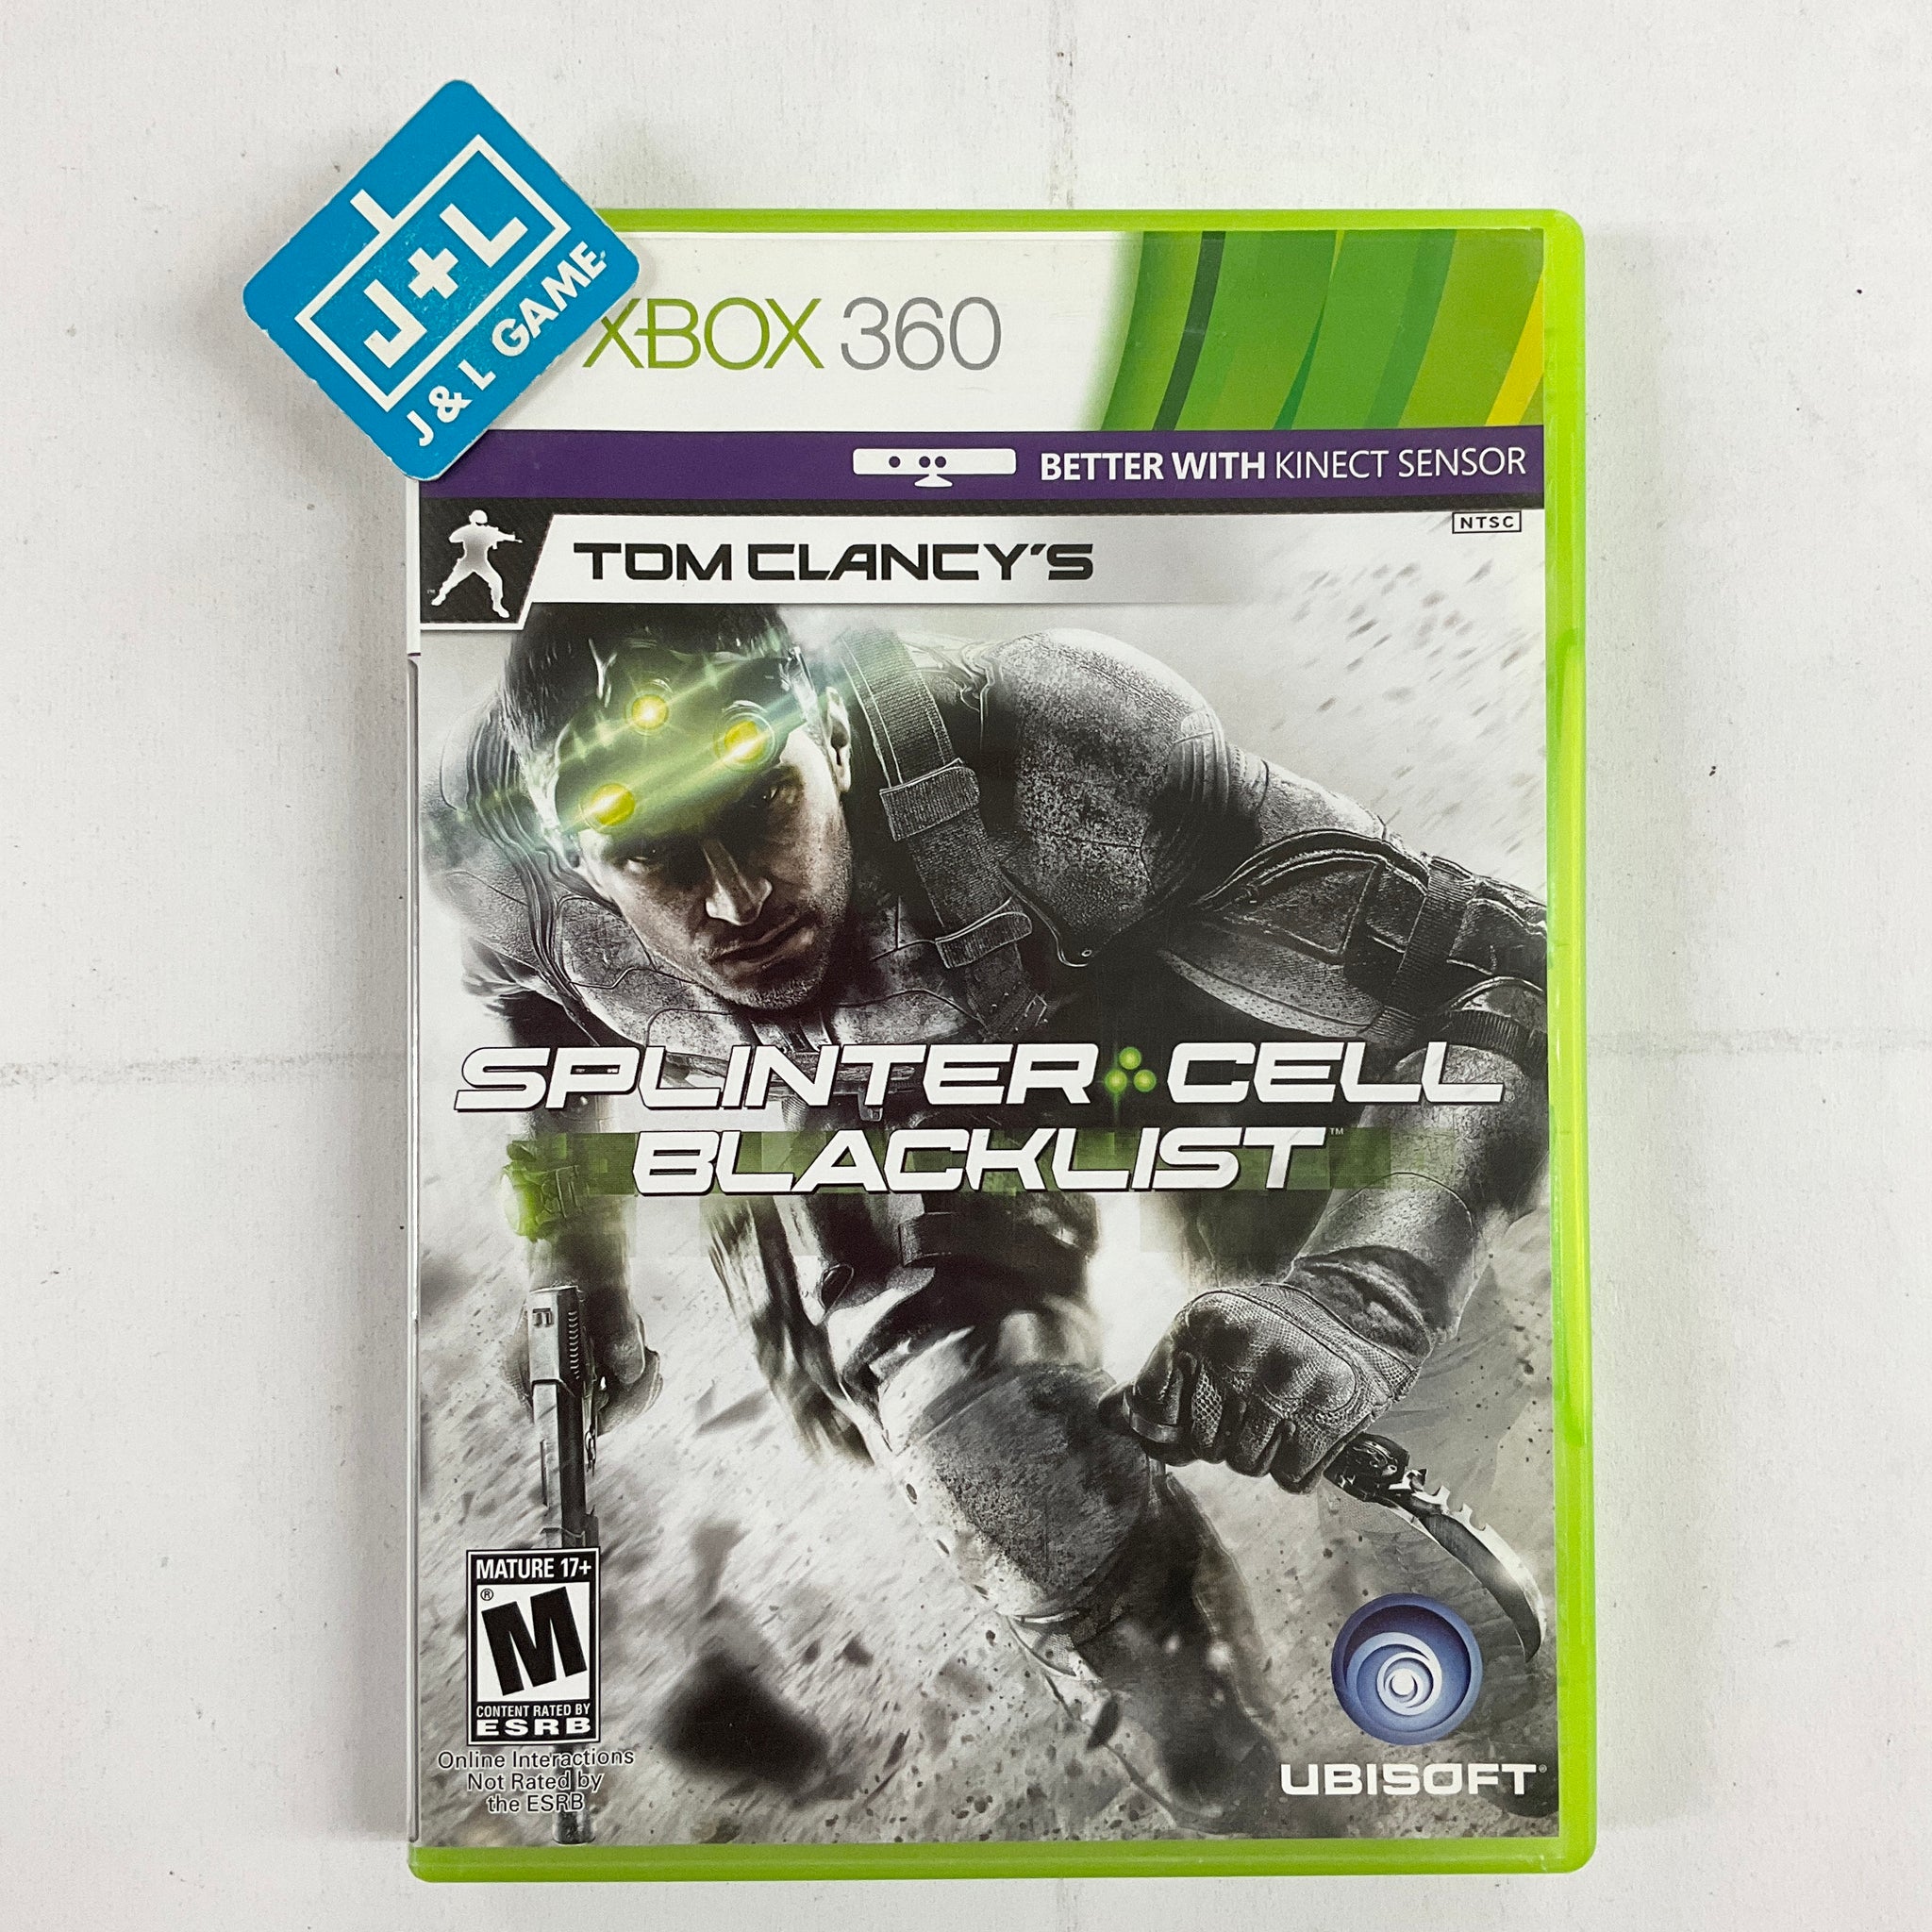 Tom Clancy's Splinter Cell Blacklist for Xbox360